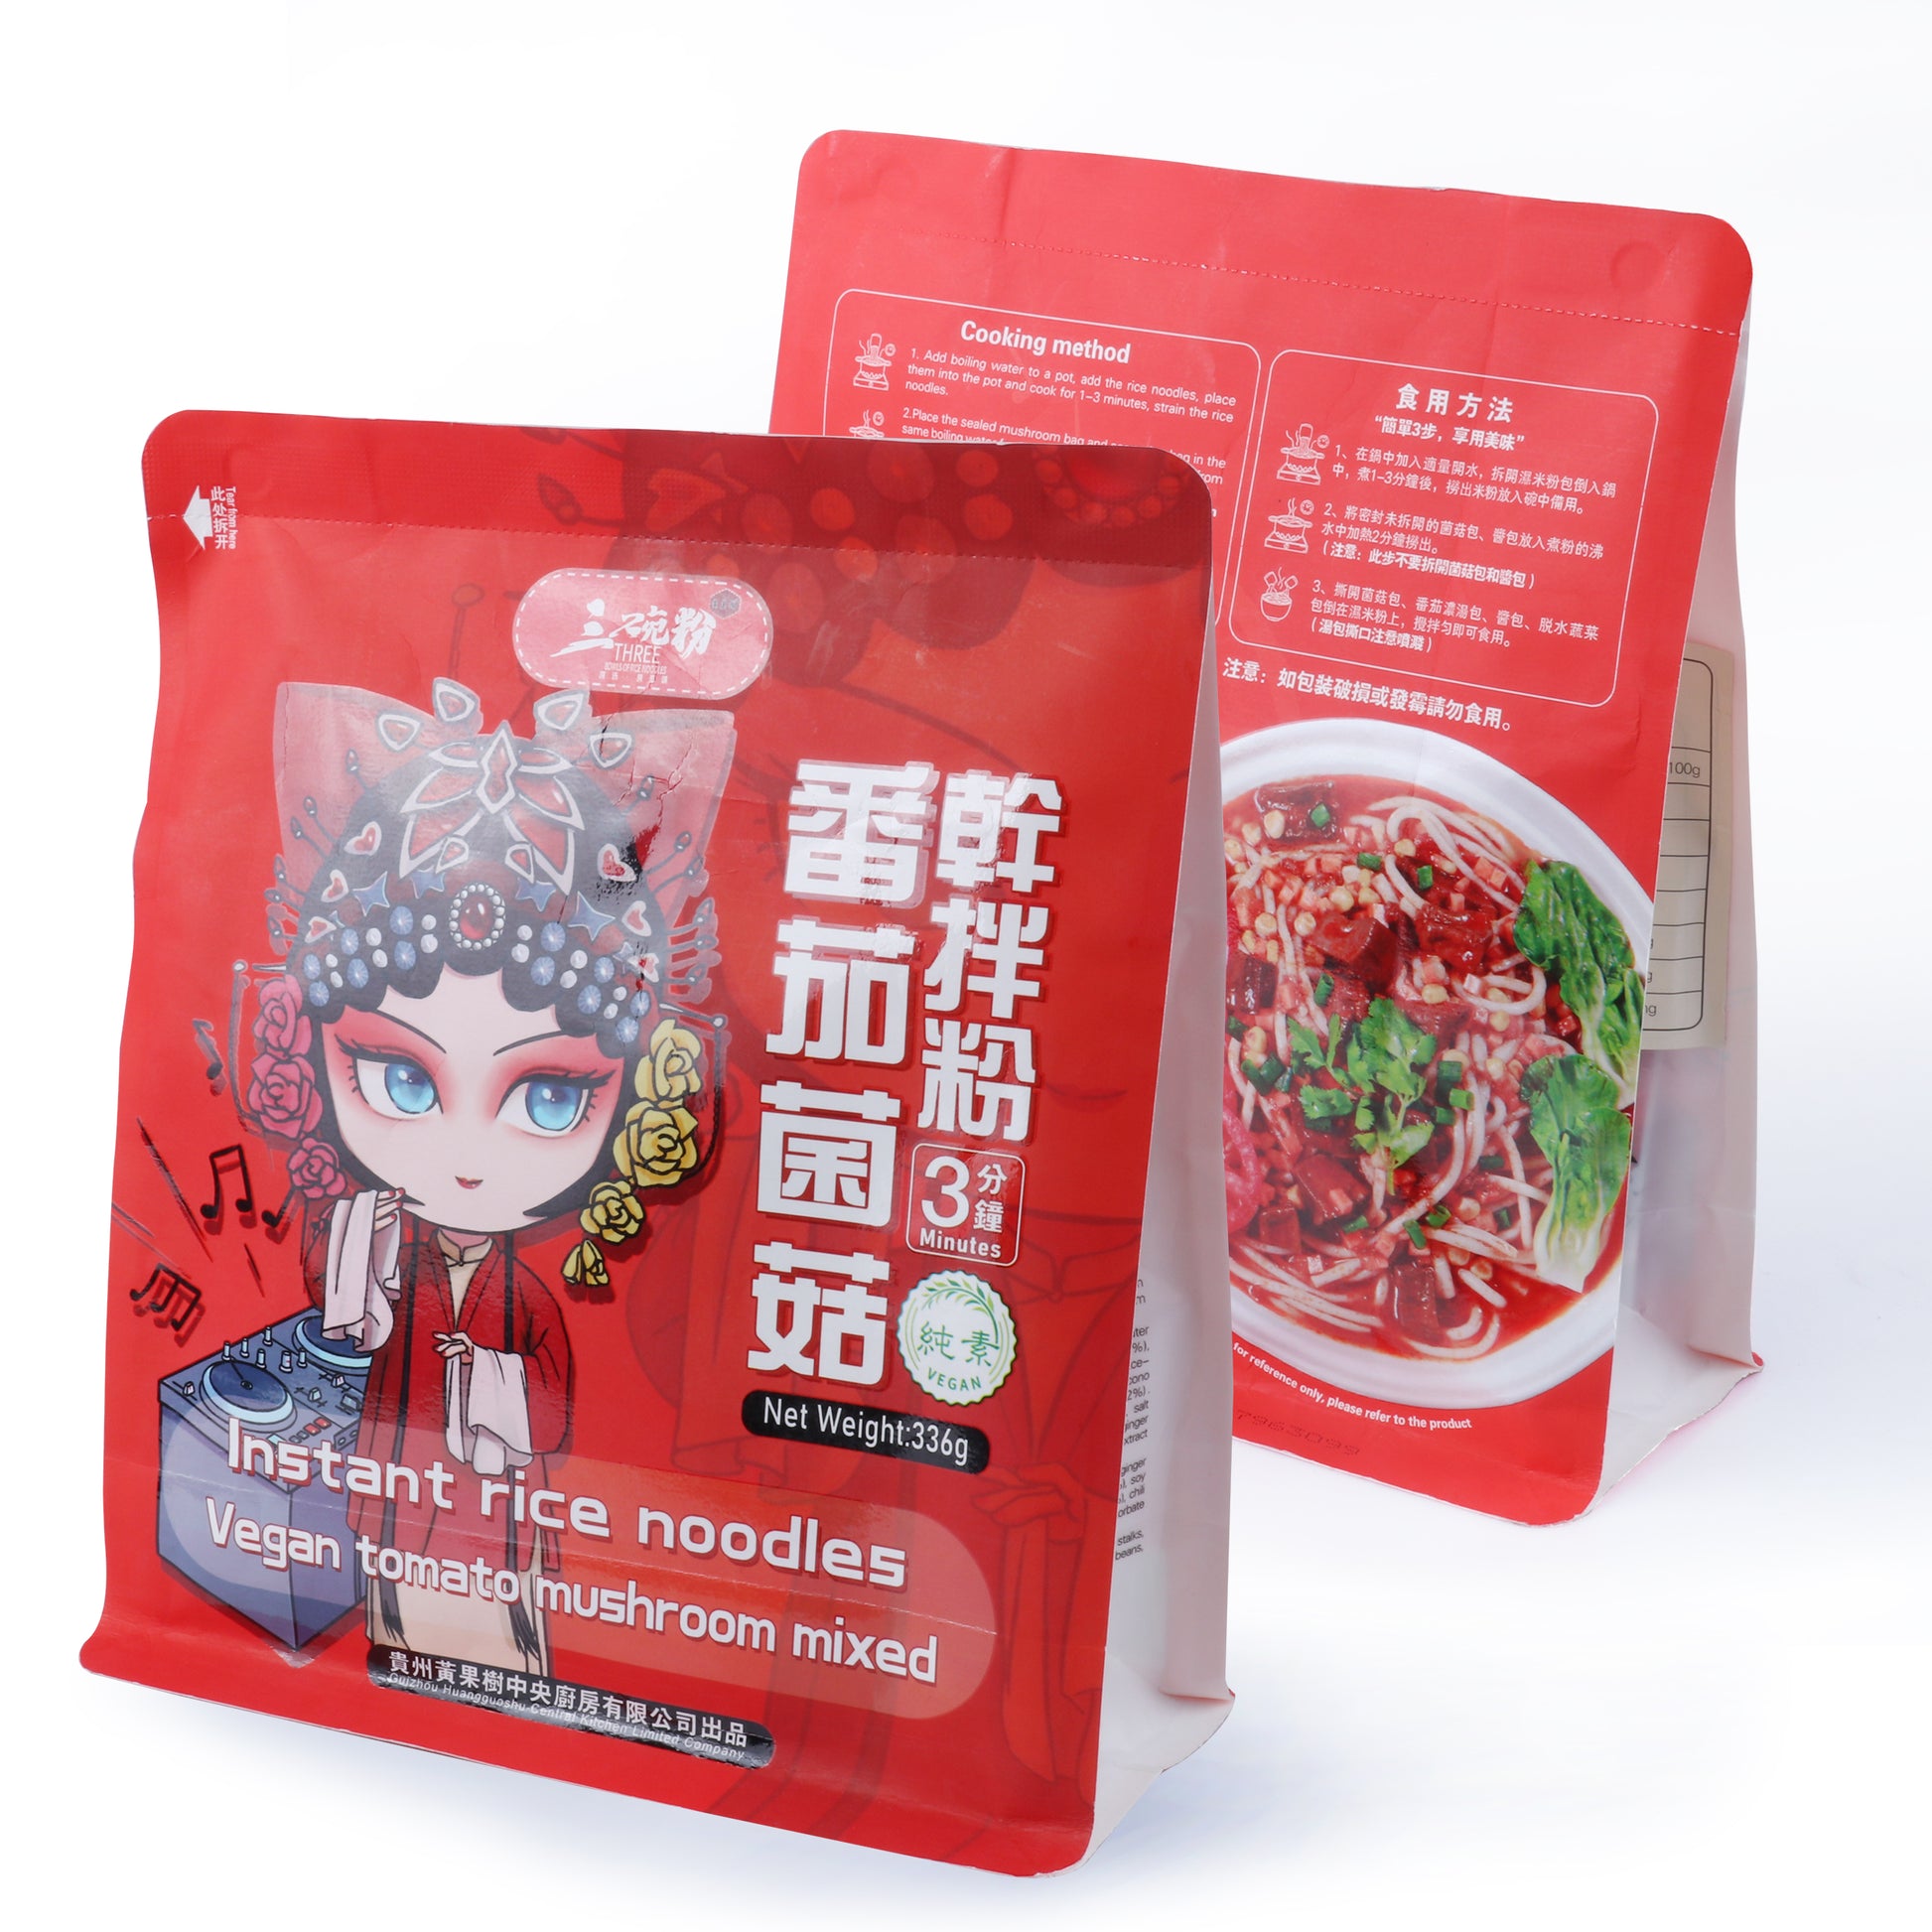 Vegan Tomato Mushroom Mixed Instant Rice Noodles main01